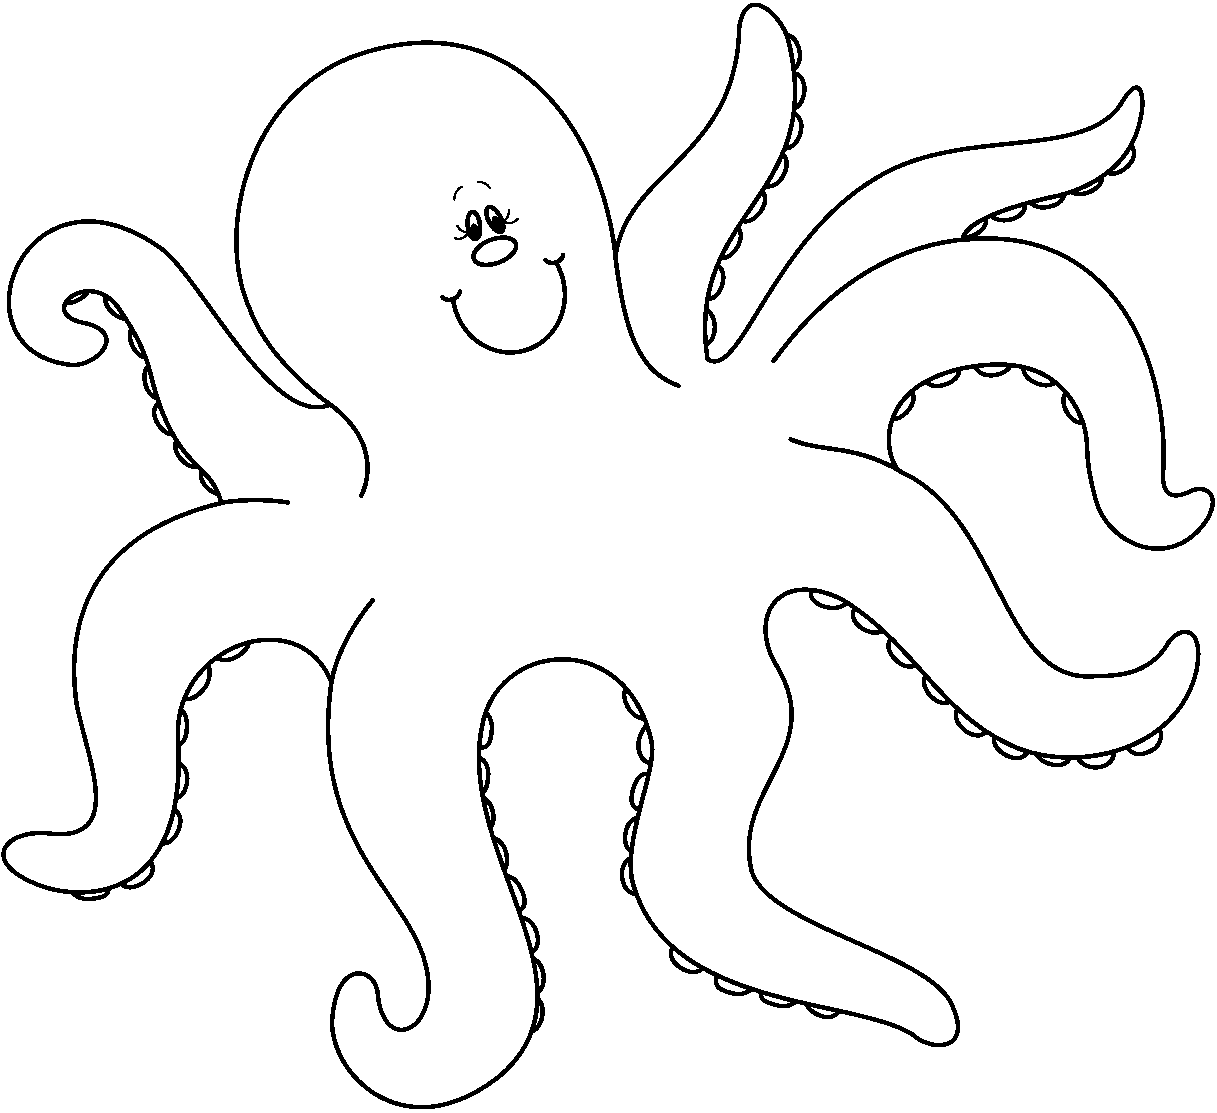 Octopus black clipart